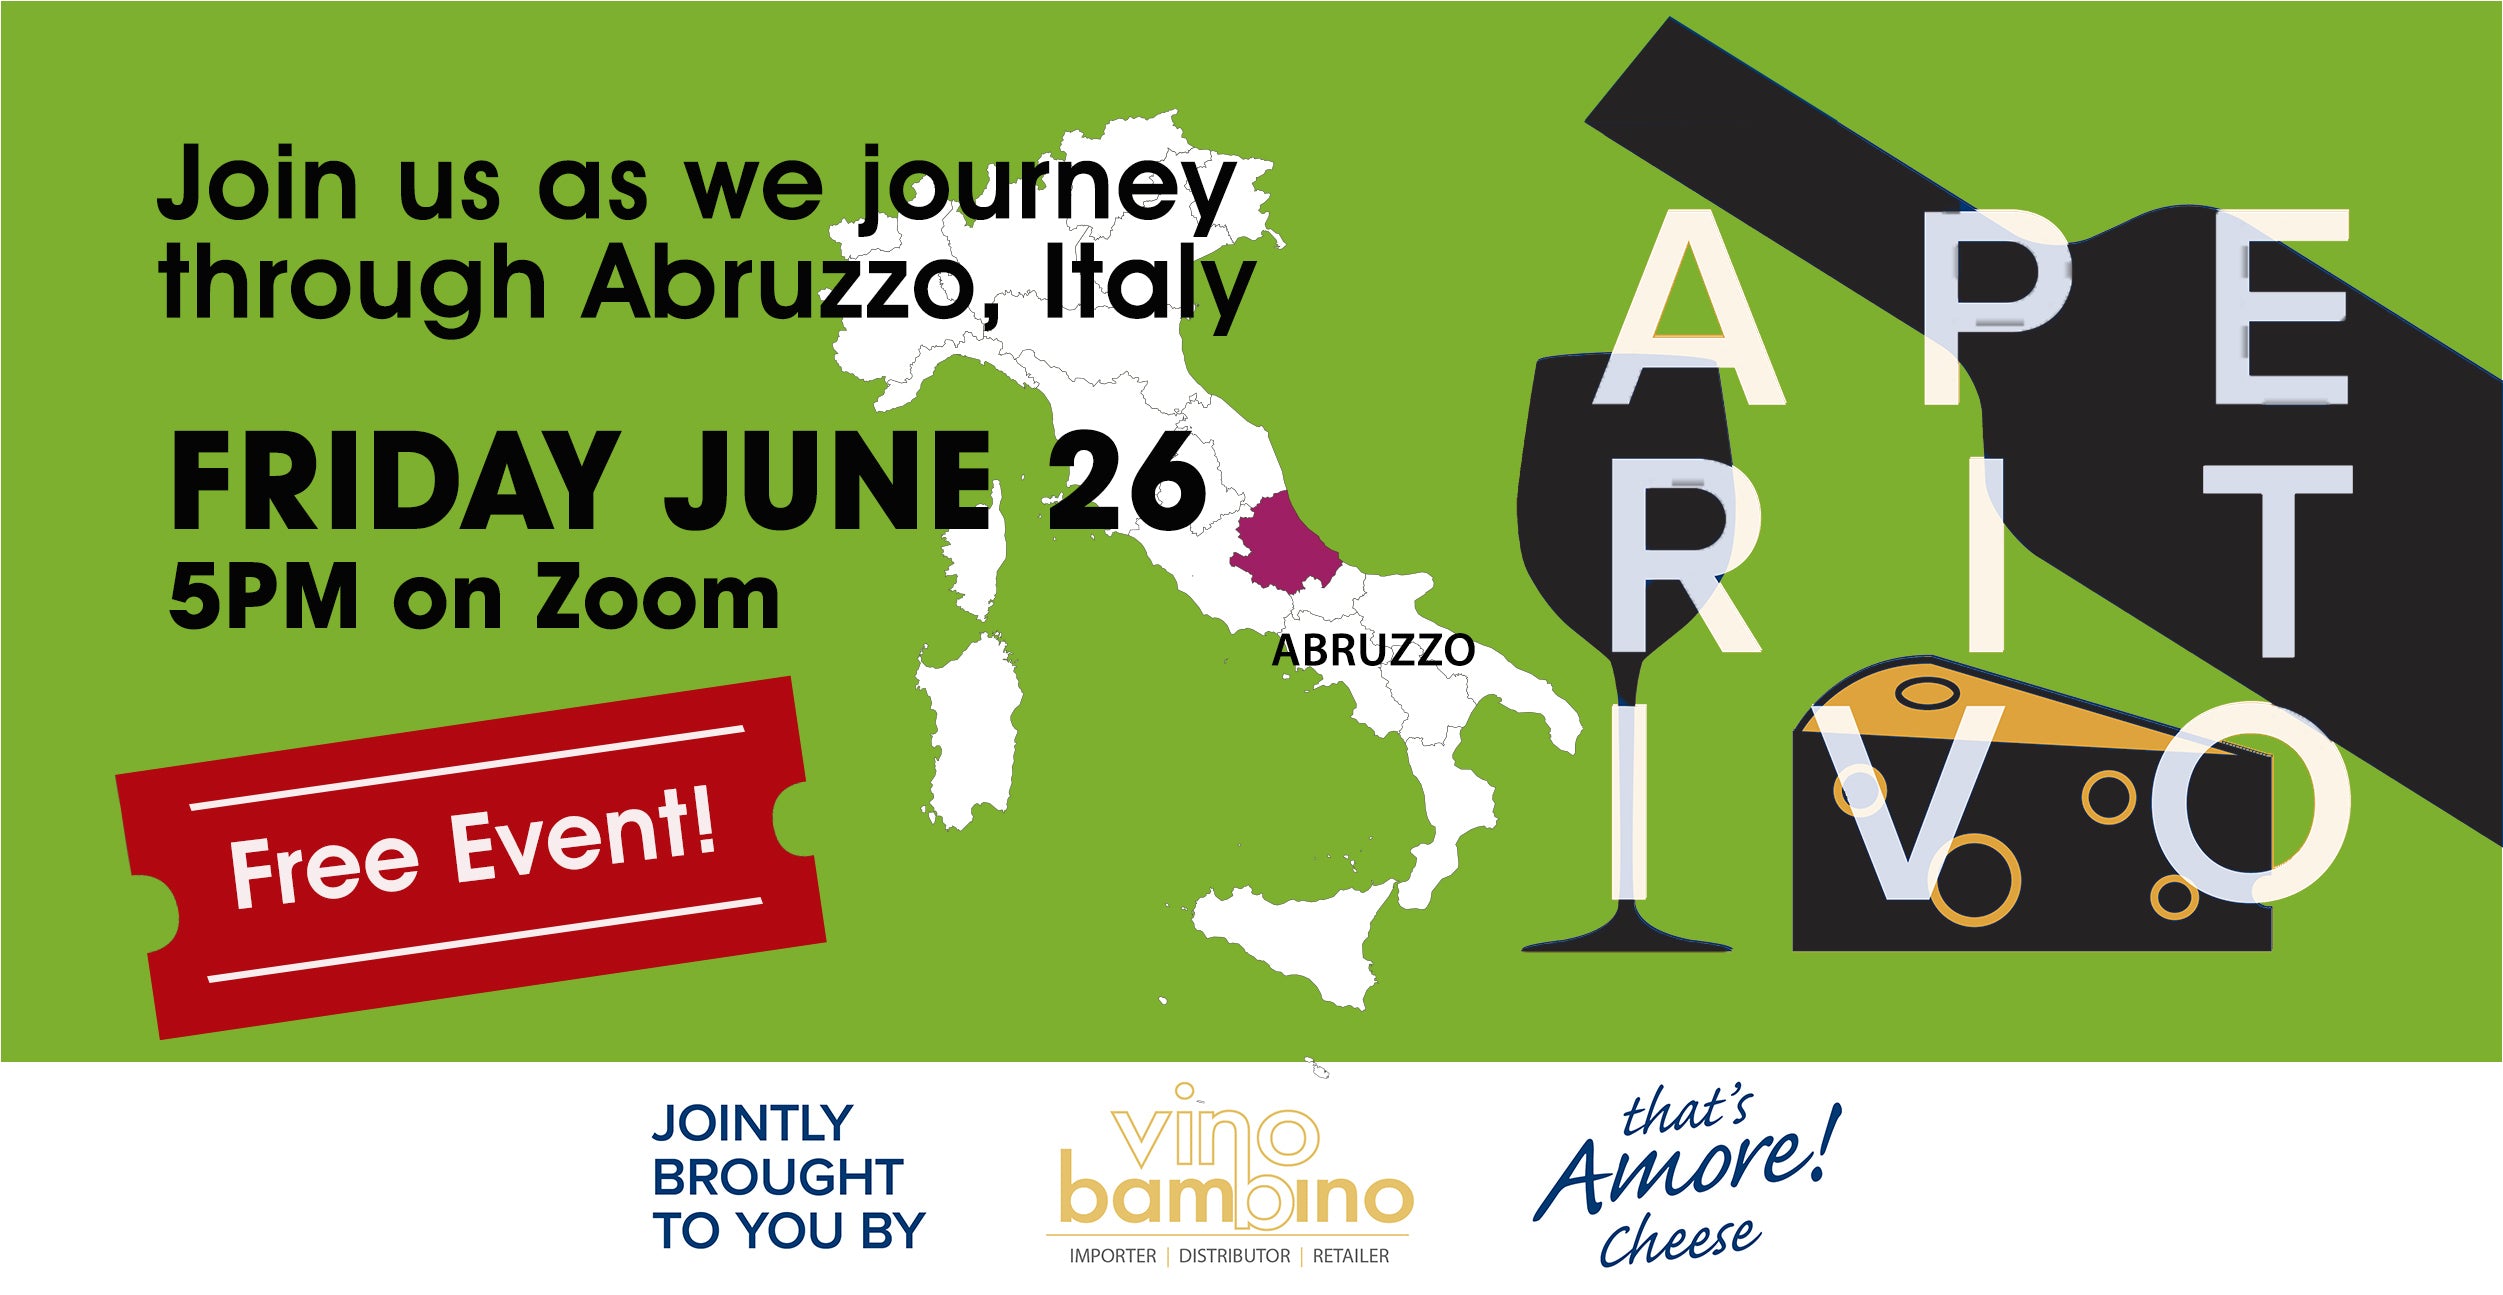 Free Event: Let's journey through Abruzzo